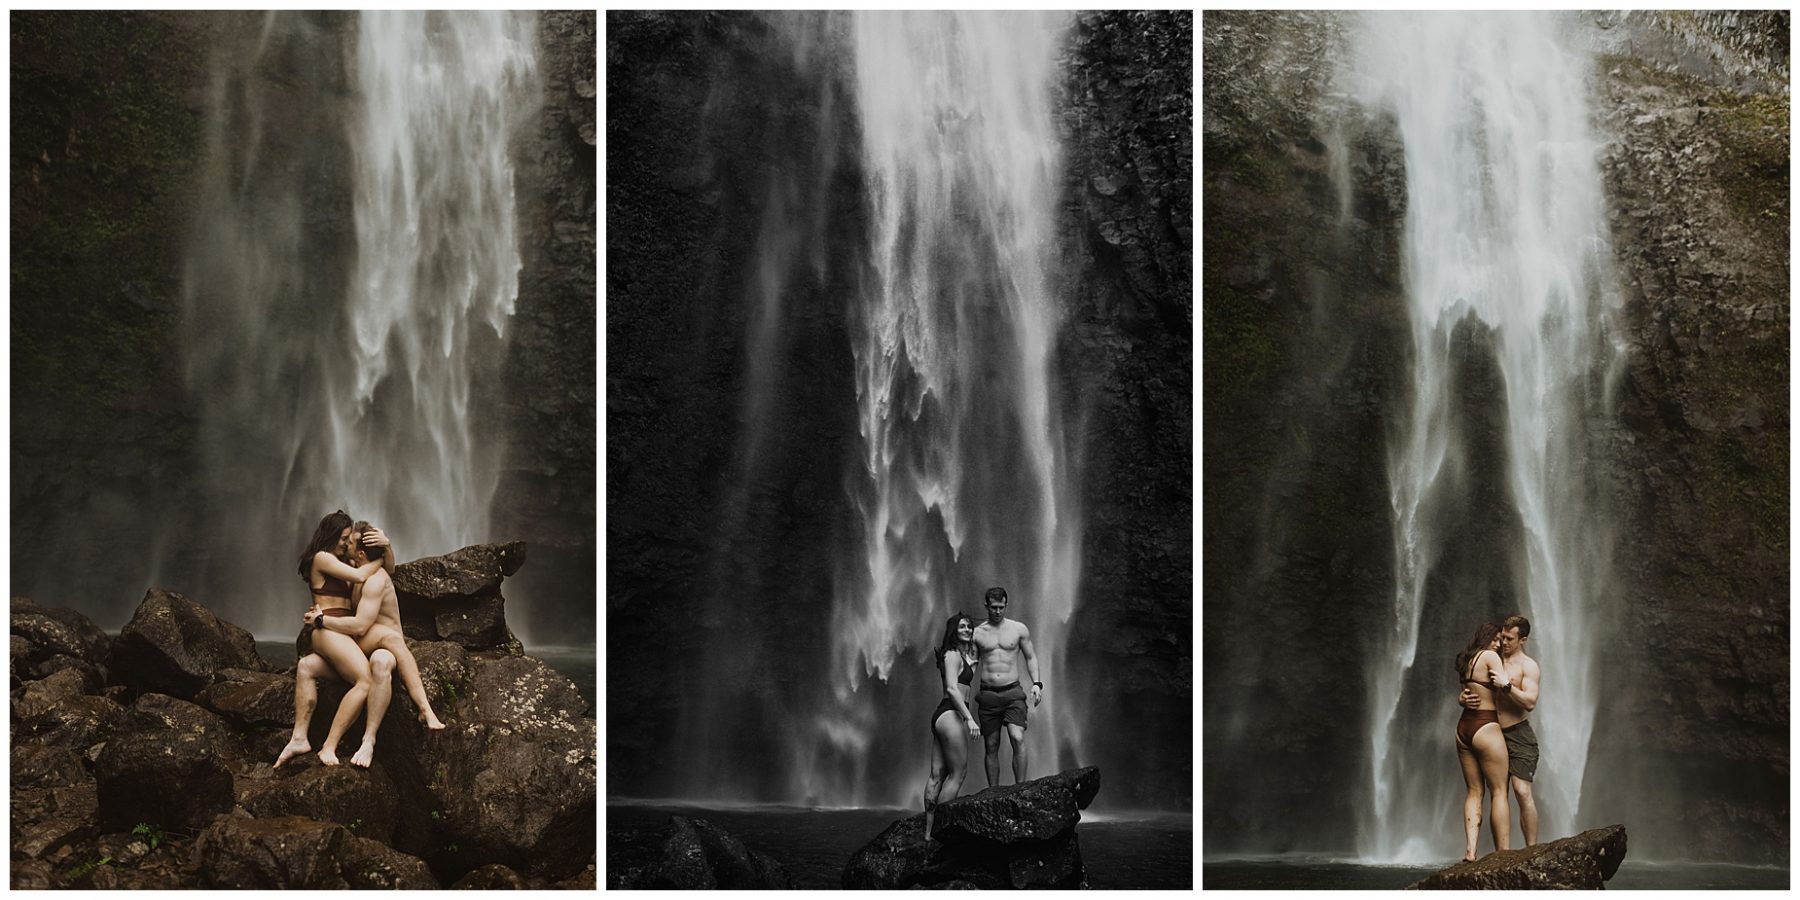 couple swimming and playing in a waterfall in kauai, hawaii